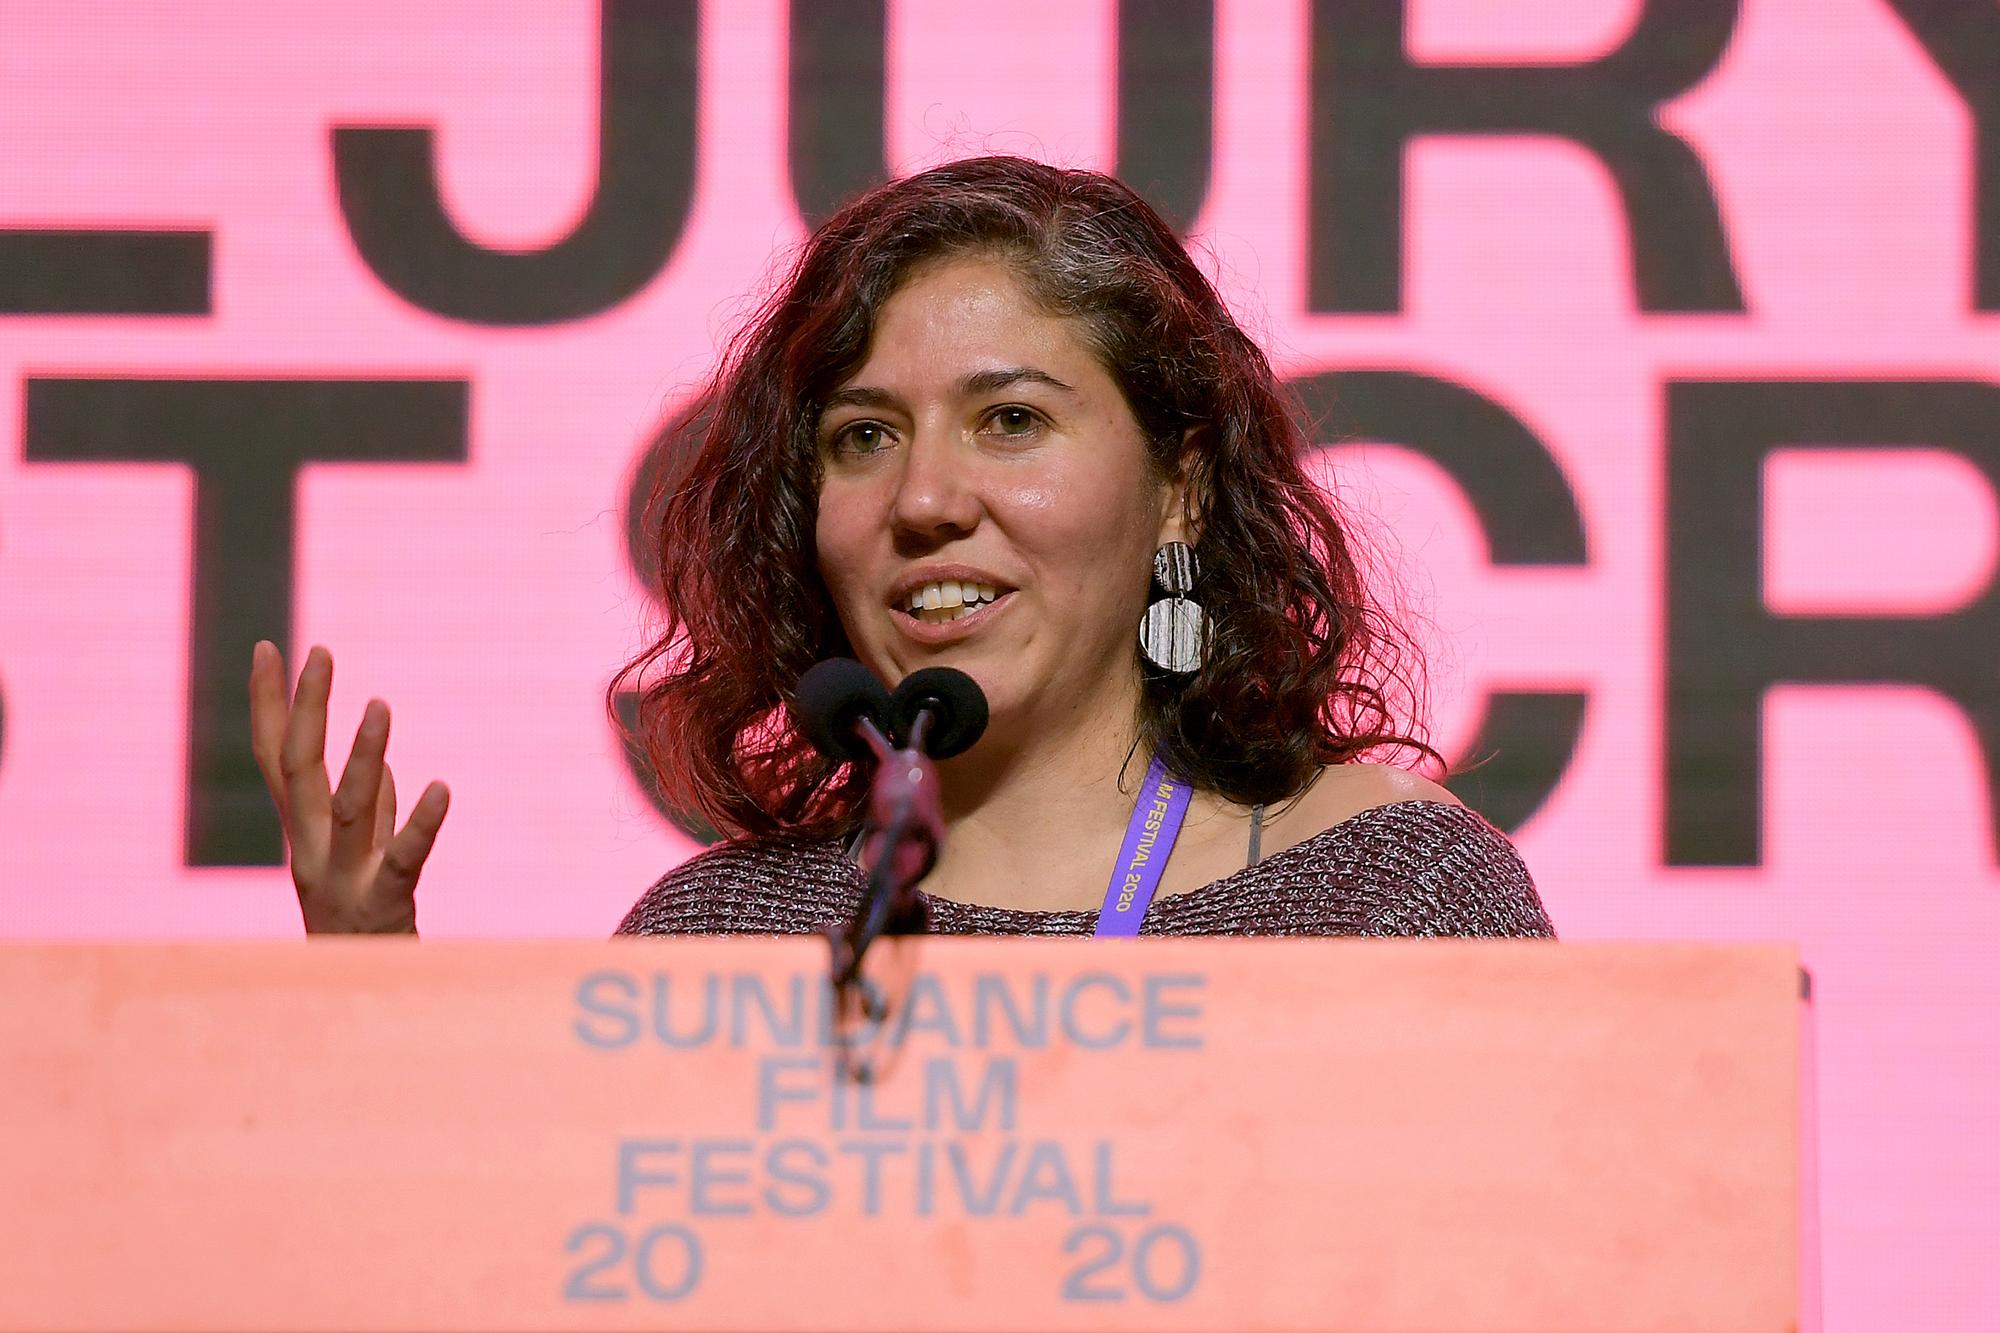 La cinéaste mexicaine Fernanda Valadez ici au Sundance film Festival en février 2020. [Getty Images via AFP - Matt Winkelmeyer]